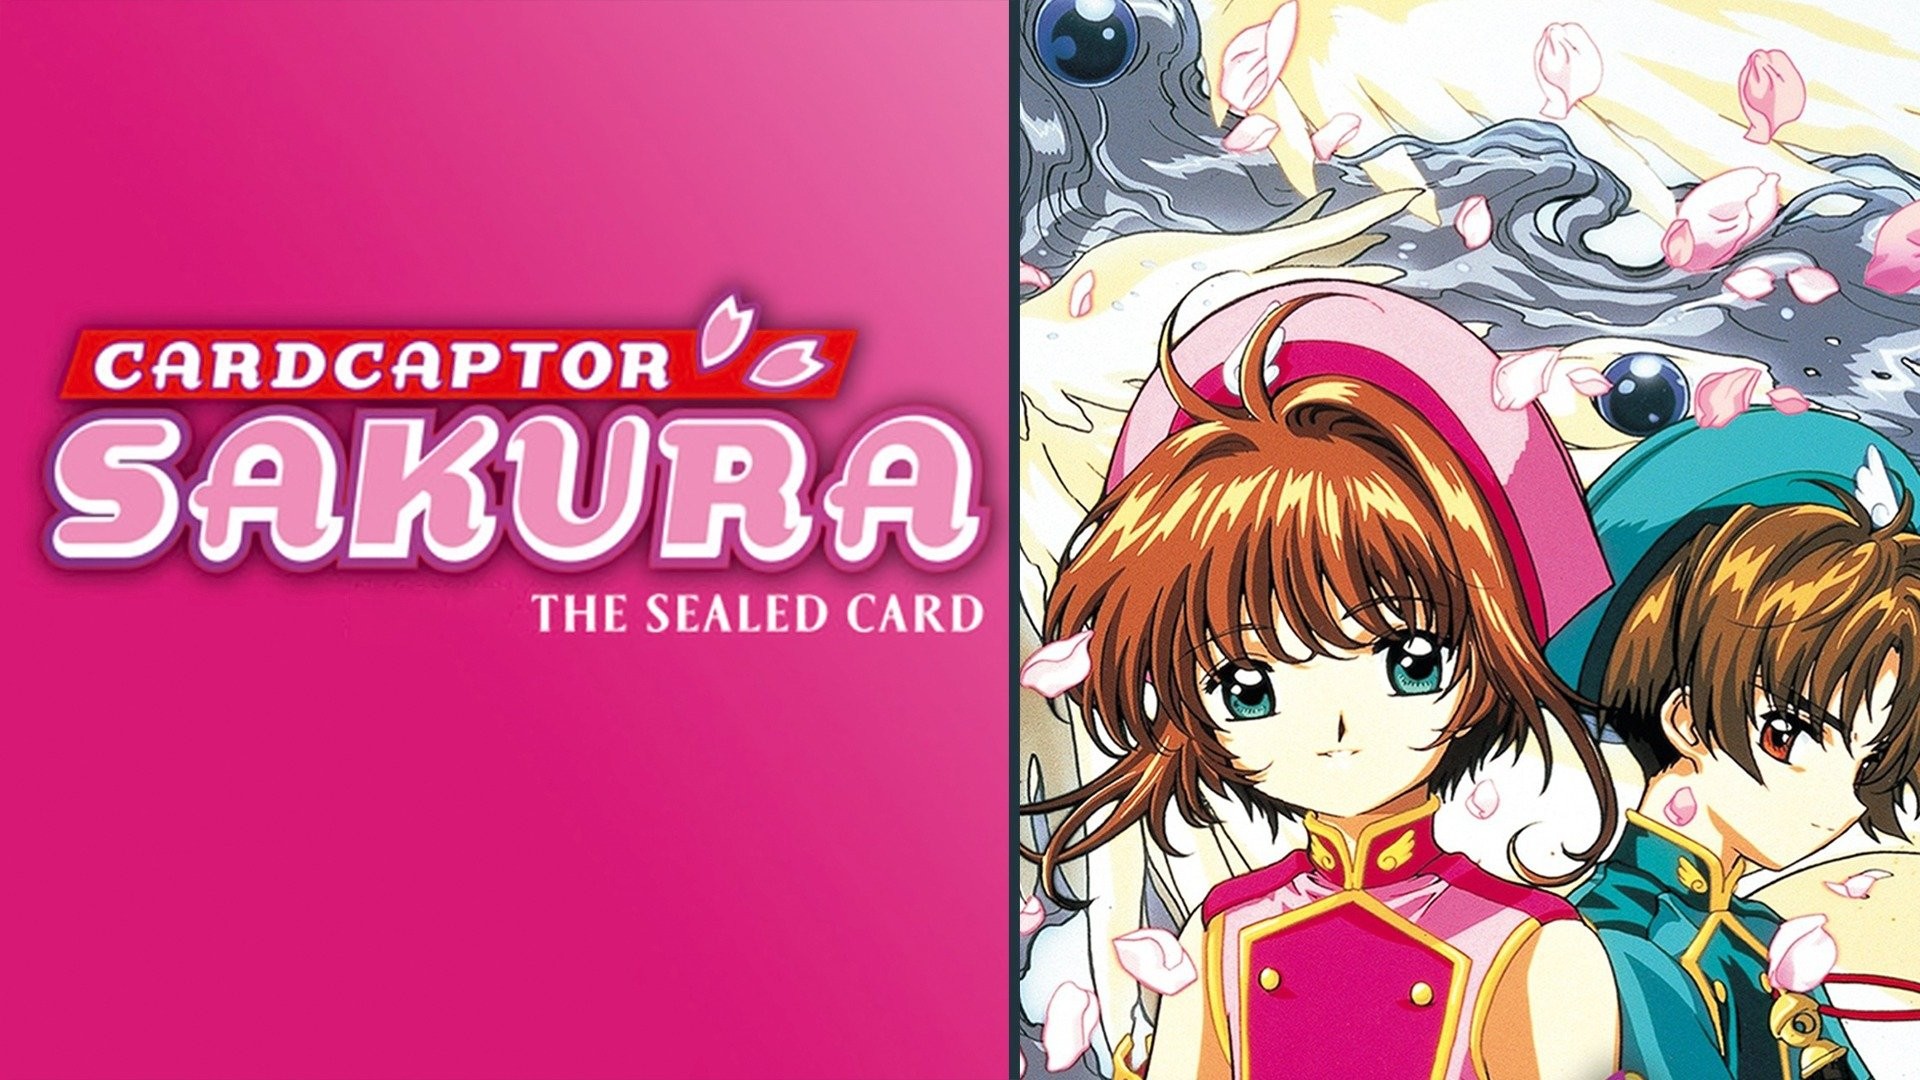 Cardcaptor Sakura: The Movie 2: The Sealed Card